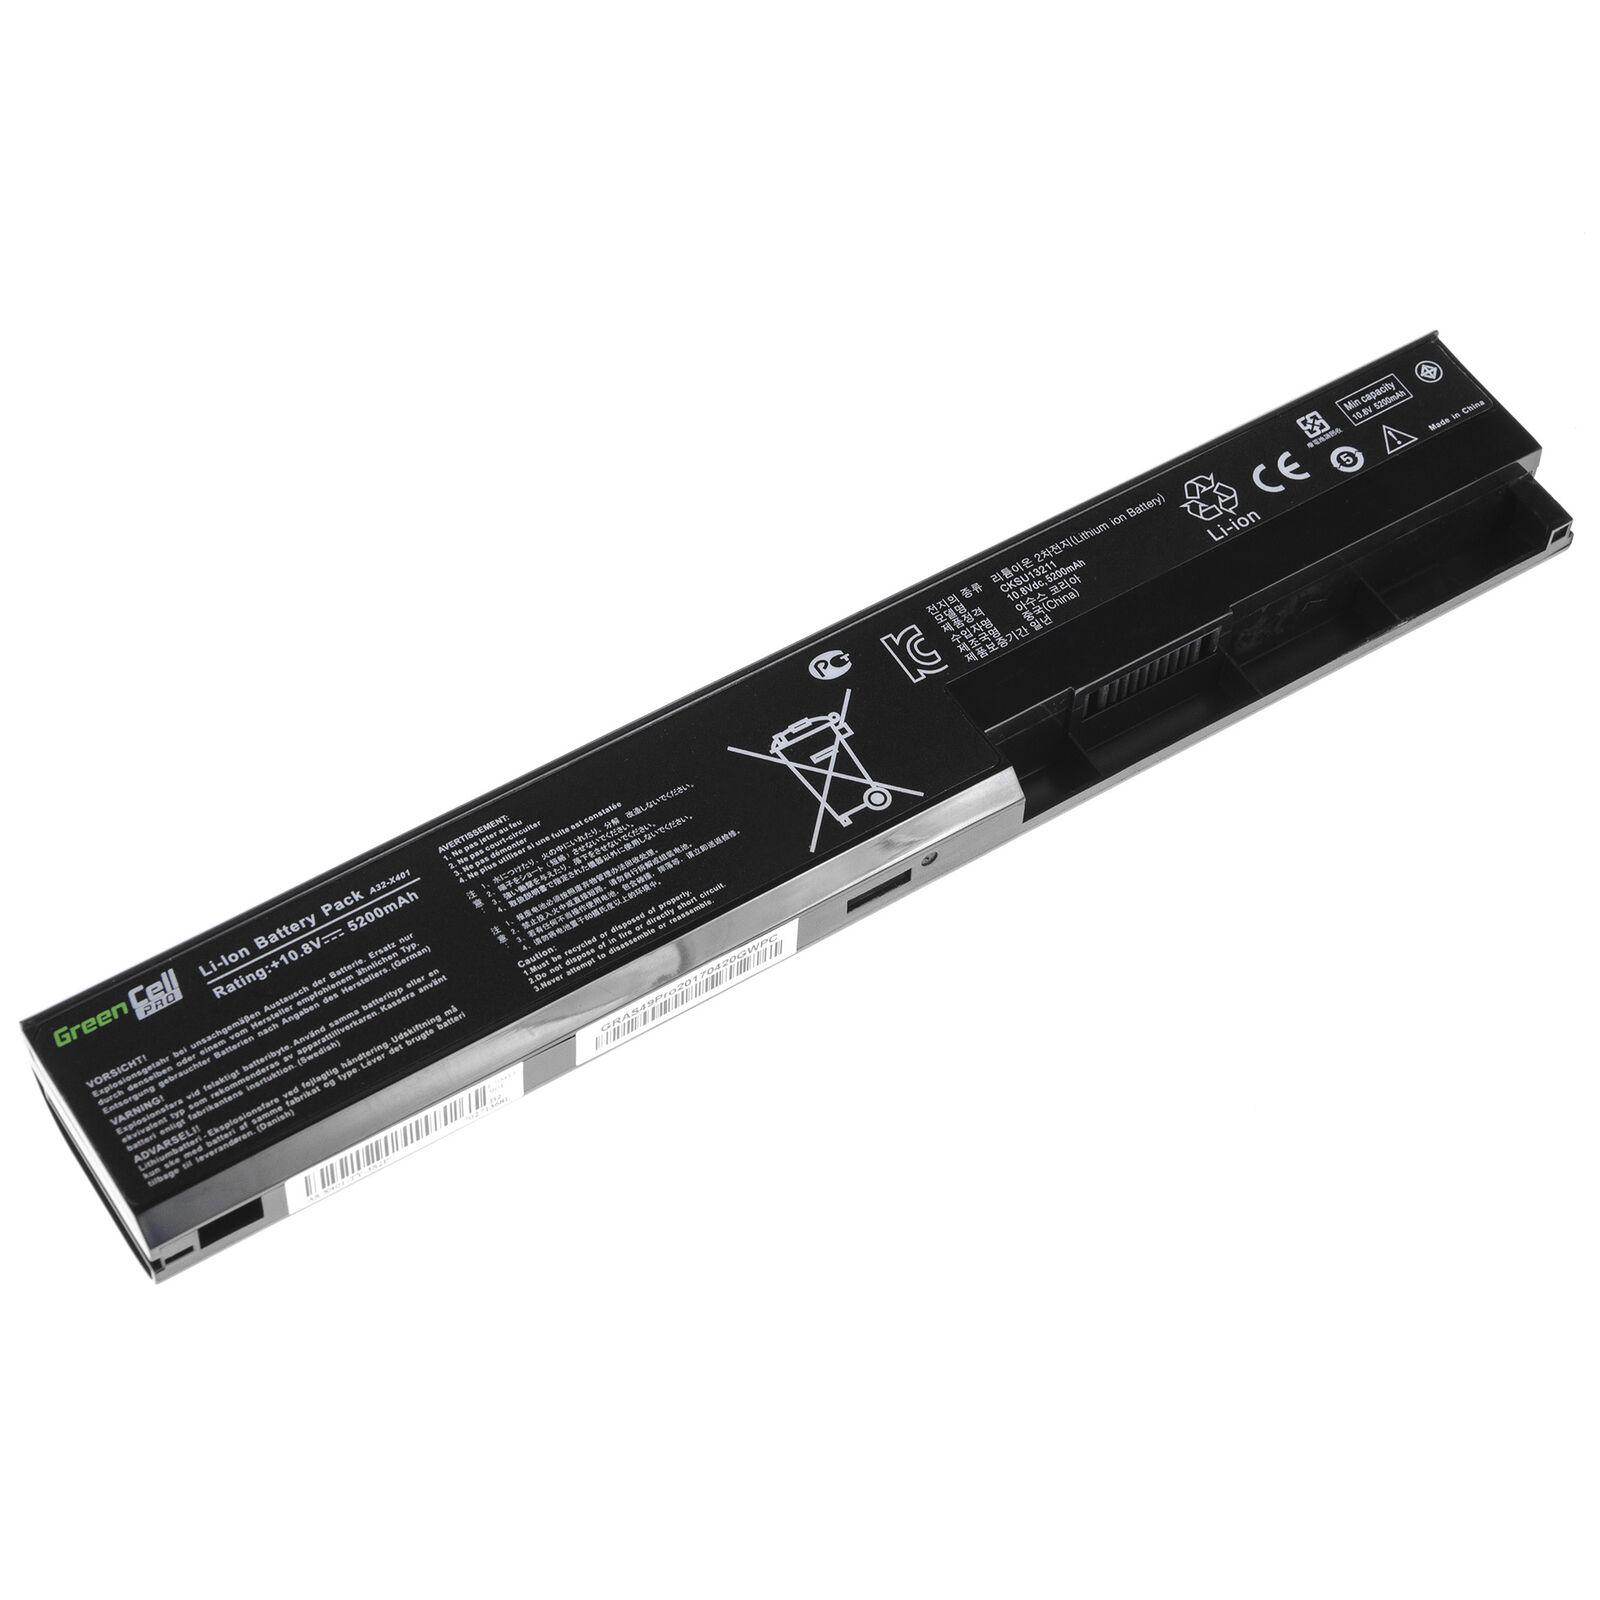 Asus A31-X401,A32-X401,A41-X401,A42-X401 compatible battery